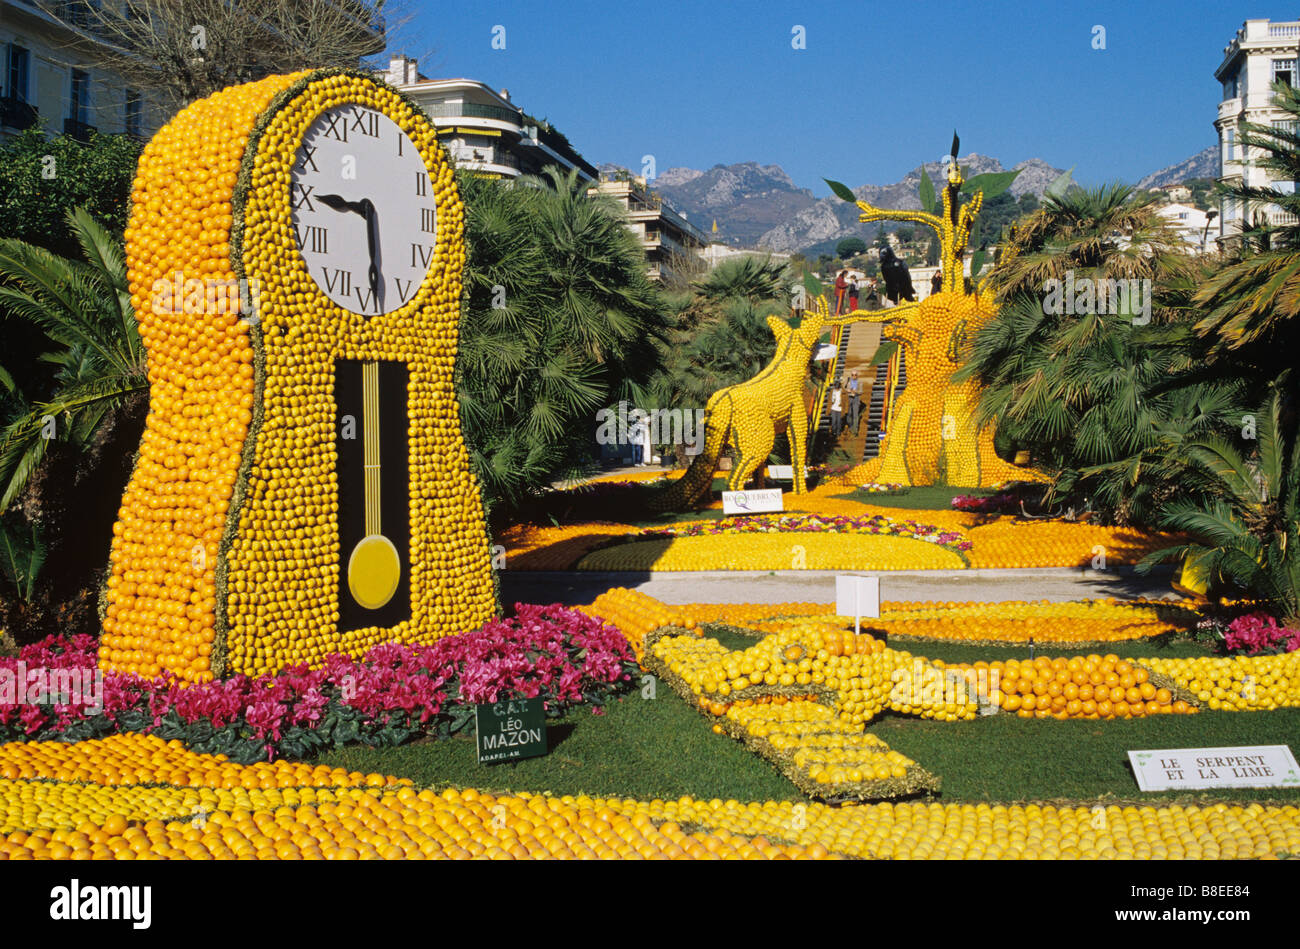 Grandfather Clock Made of Lemons & Oranges, Lemon Festival, Menton, Côte d'Azur, France Stock Photo